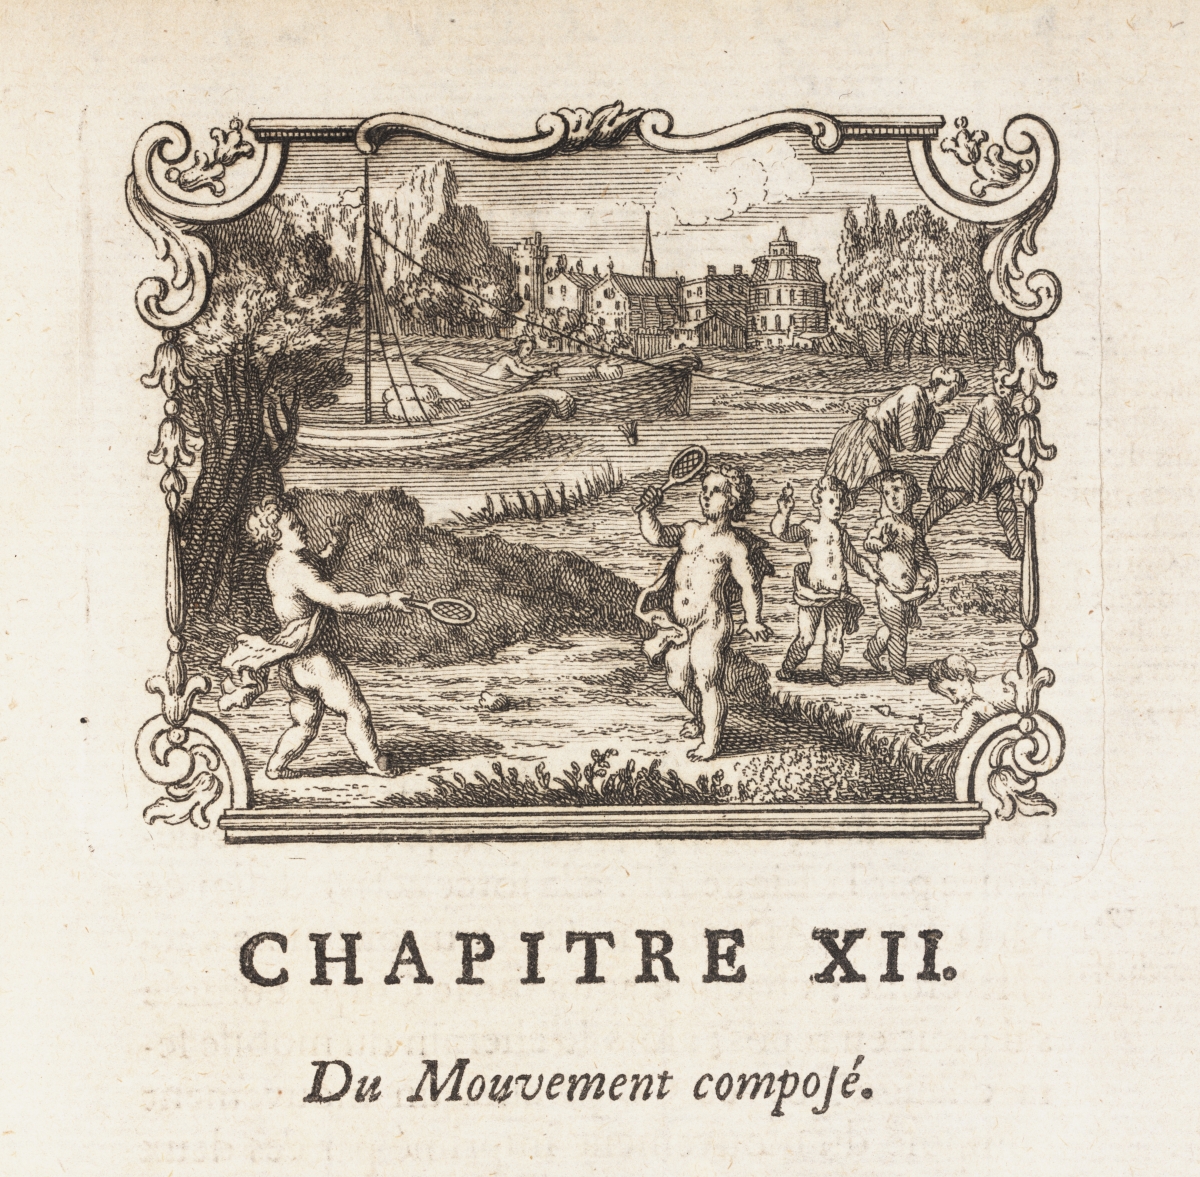 Image from du Chatelet's Institutions de Physique.